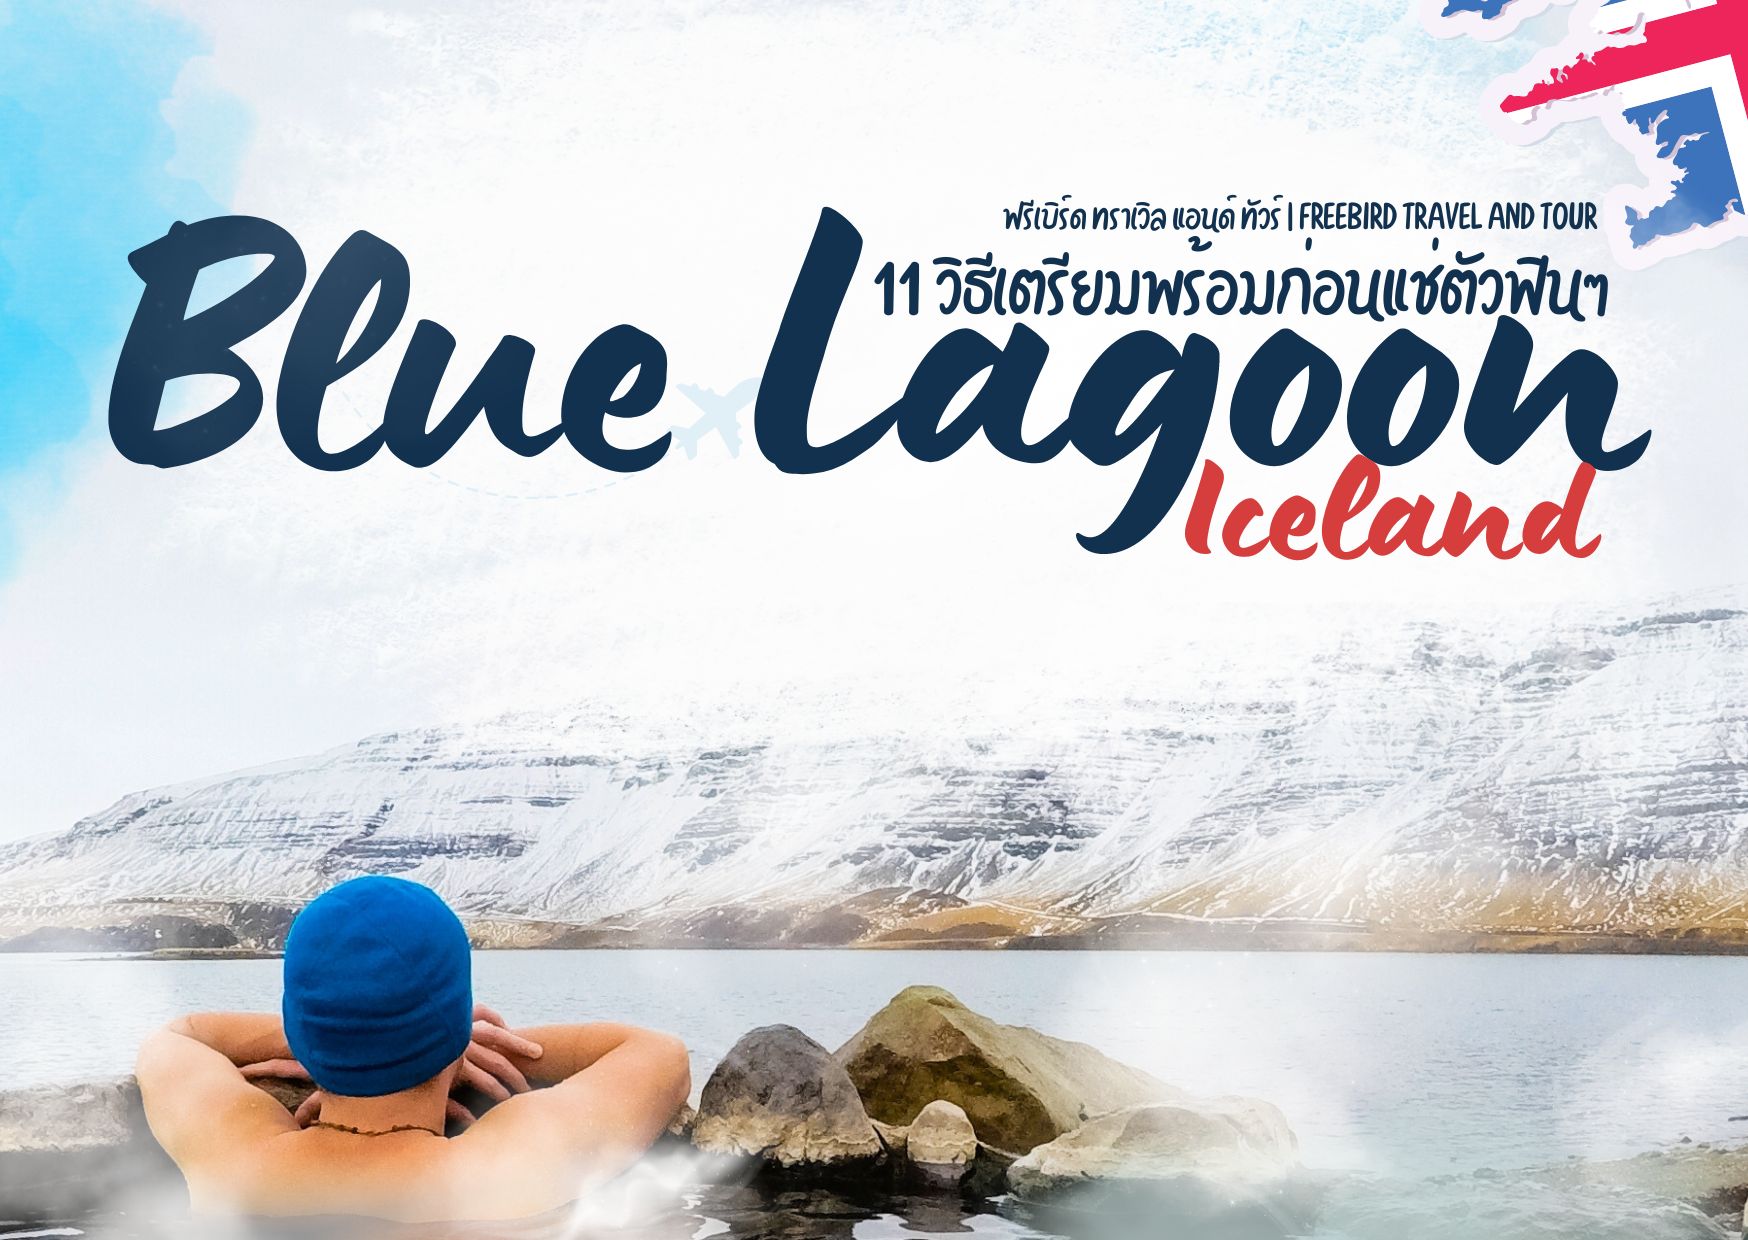 Blue Lagoon iceland freebirdtour